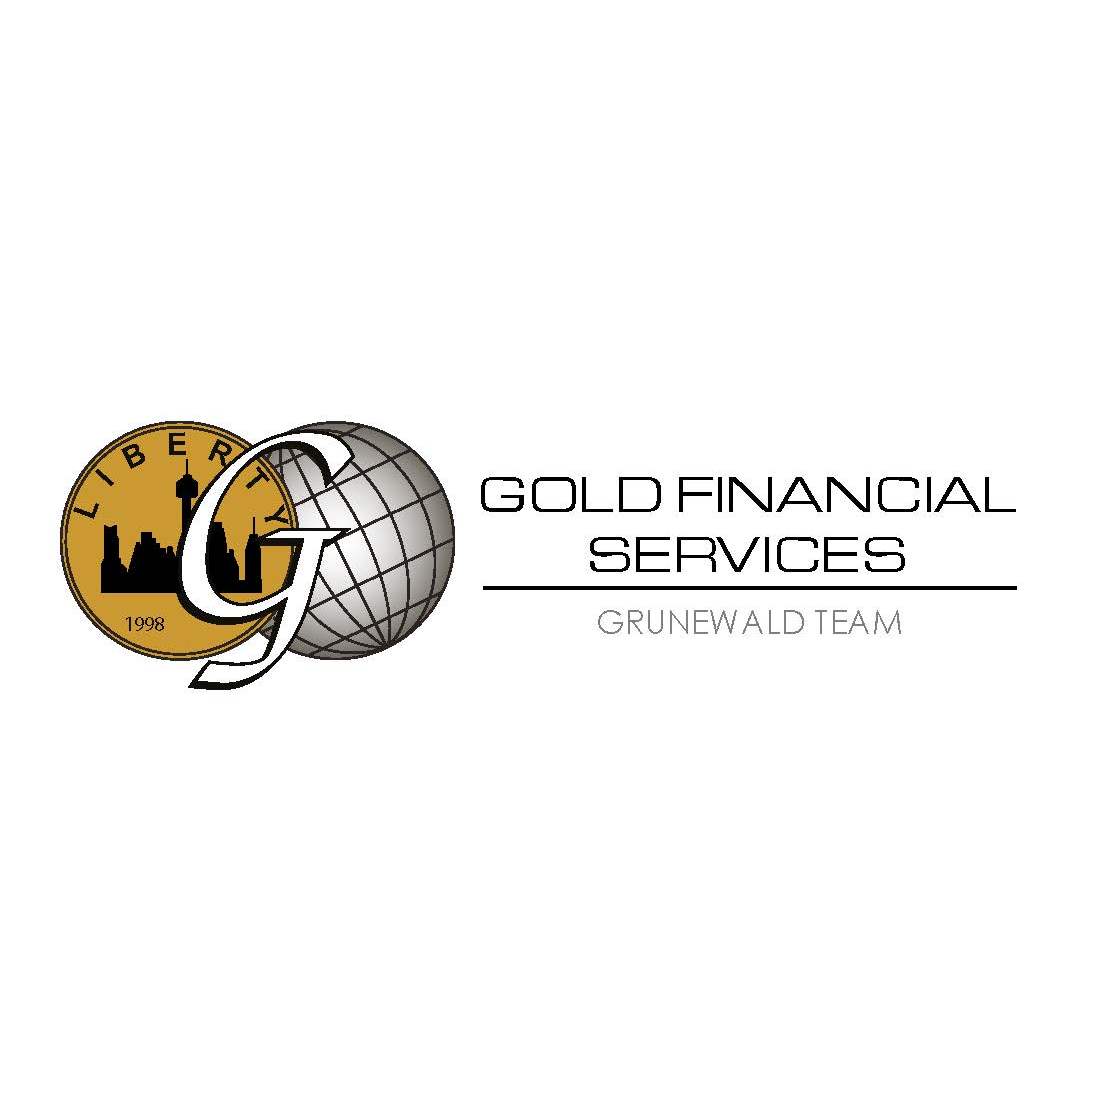 Gold Financial Services- Grunewald Team